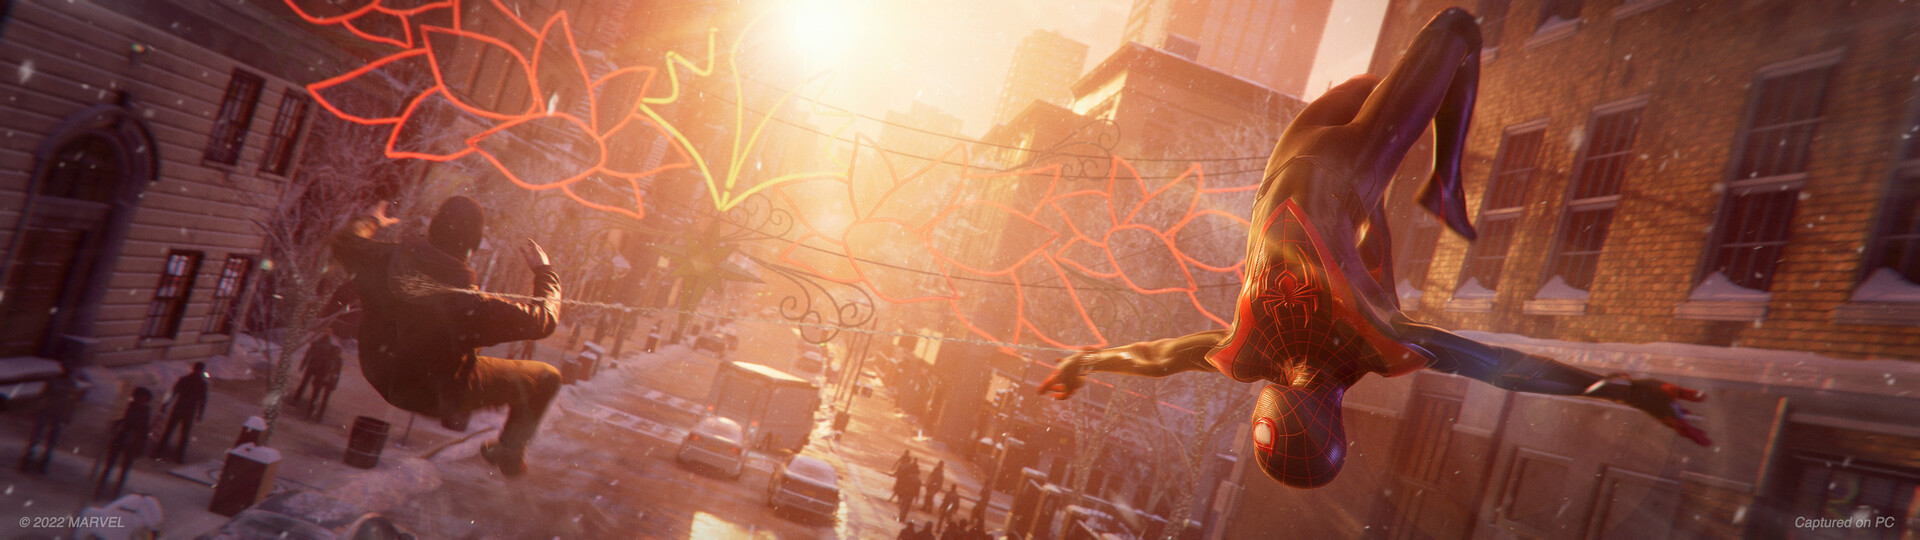 Marvel's Spider-Man: Miles Morales Steam Altergift